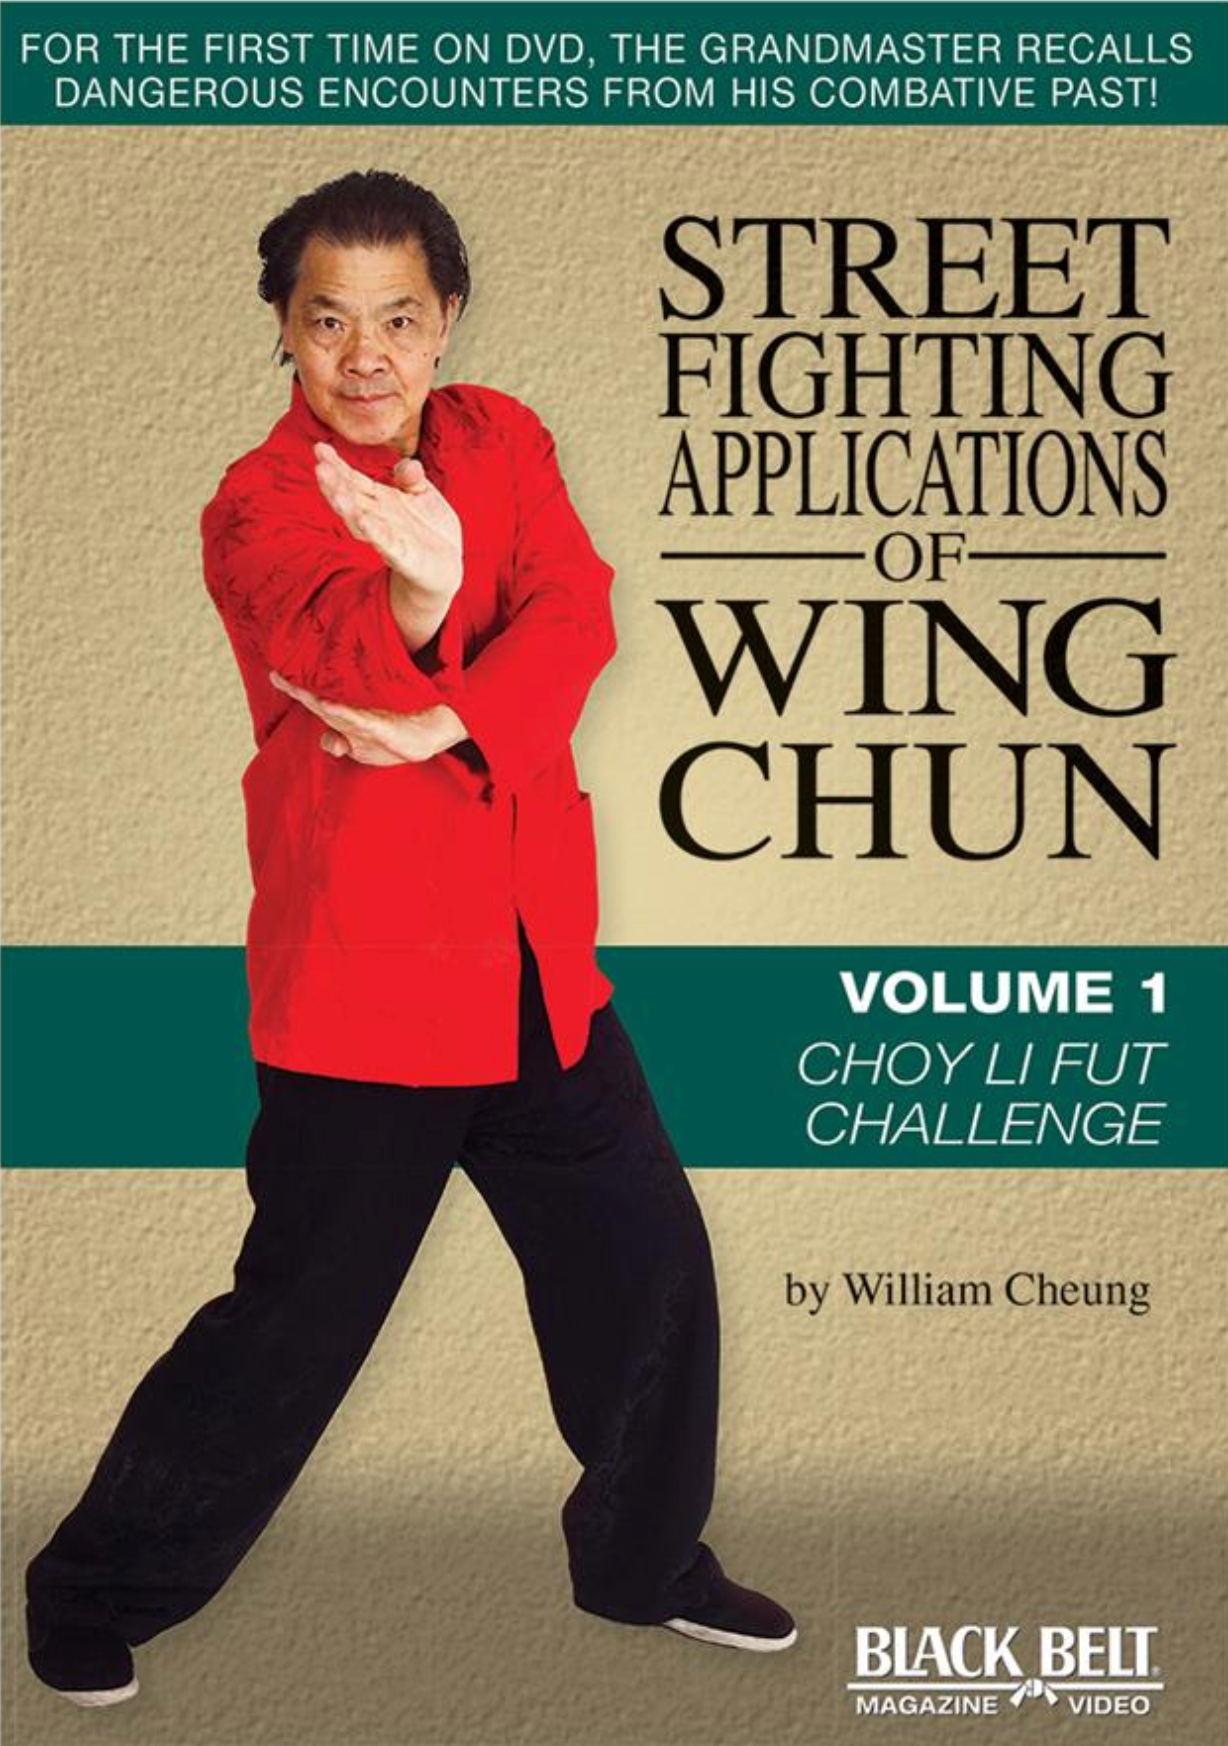 Street Fighting Applications of Wing Chun DVD 1: Choy Li Fut by William Cheung - Budovideos Inc